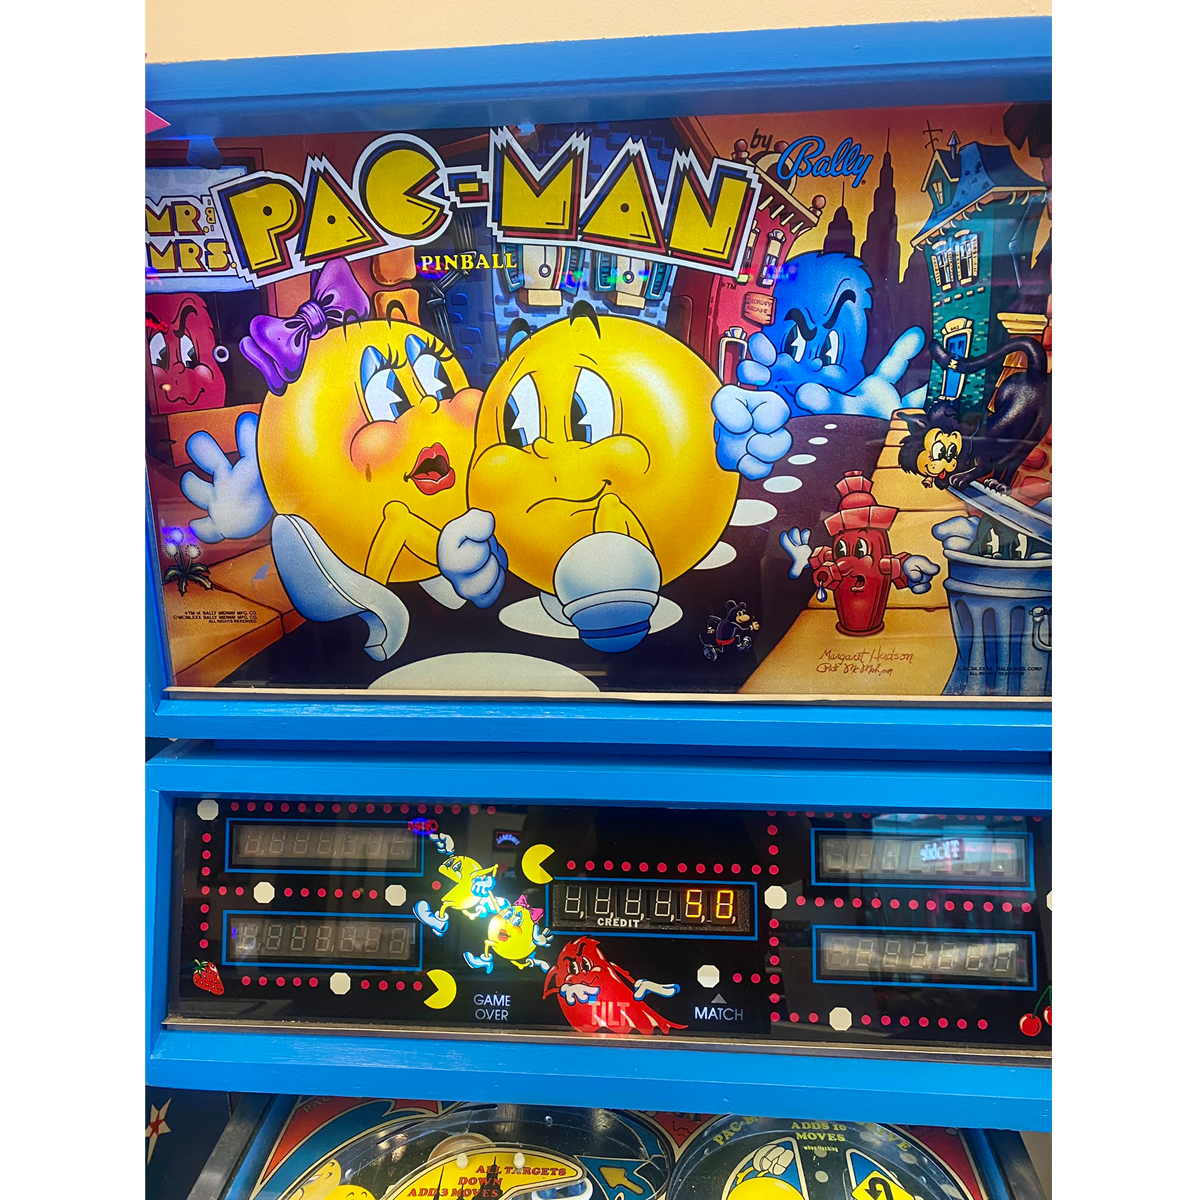 Mr. & Mrs. Pac-Man Pinball 3